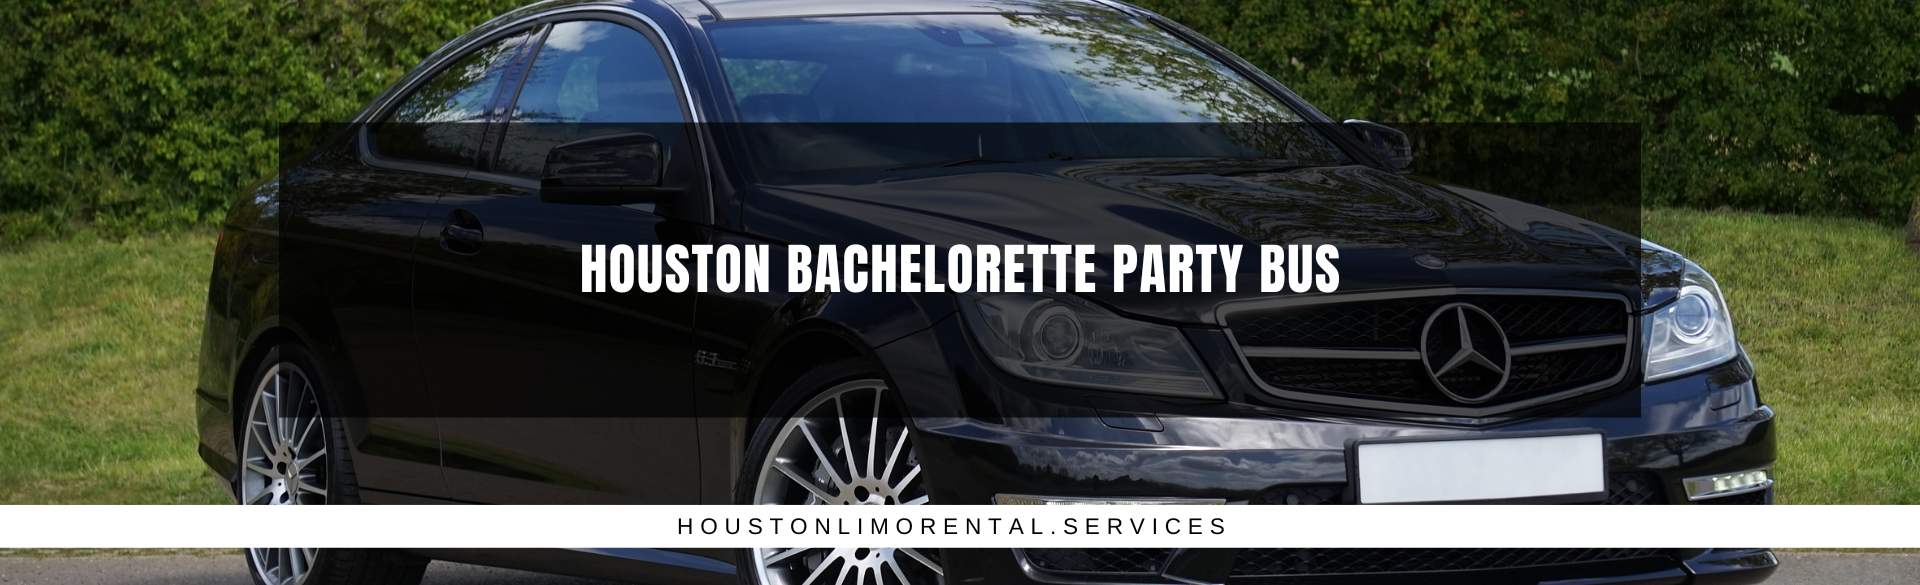 Houston Bachelorette Party Bus